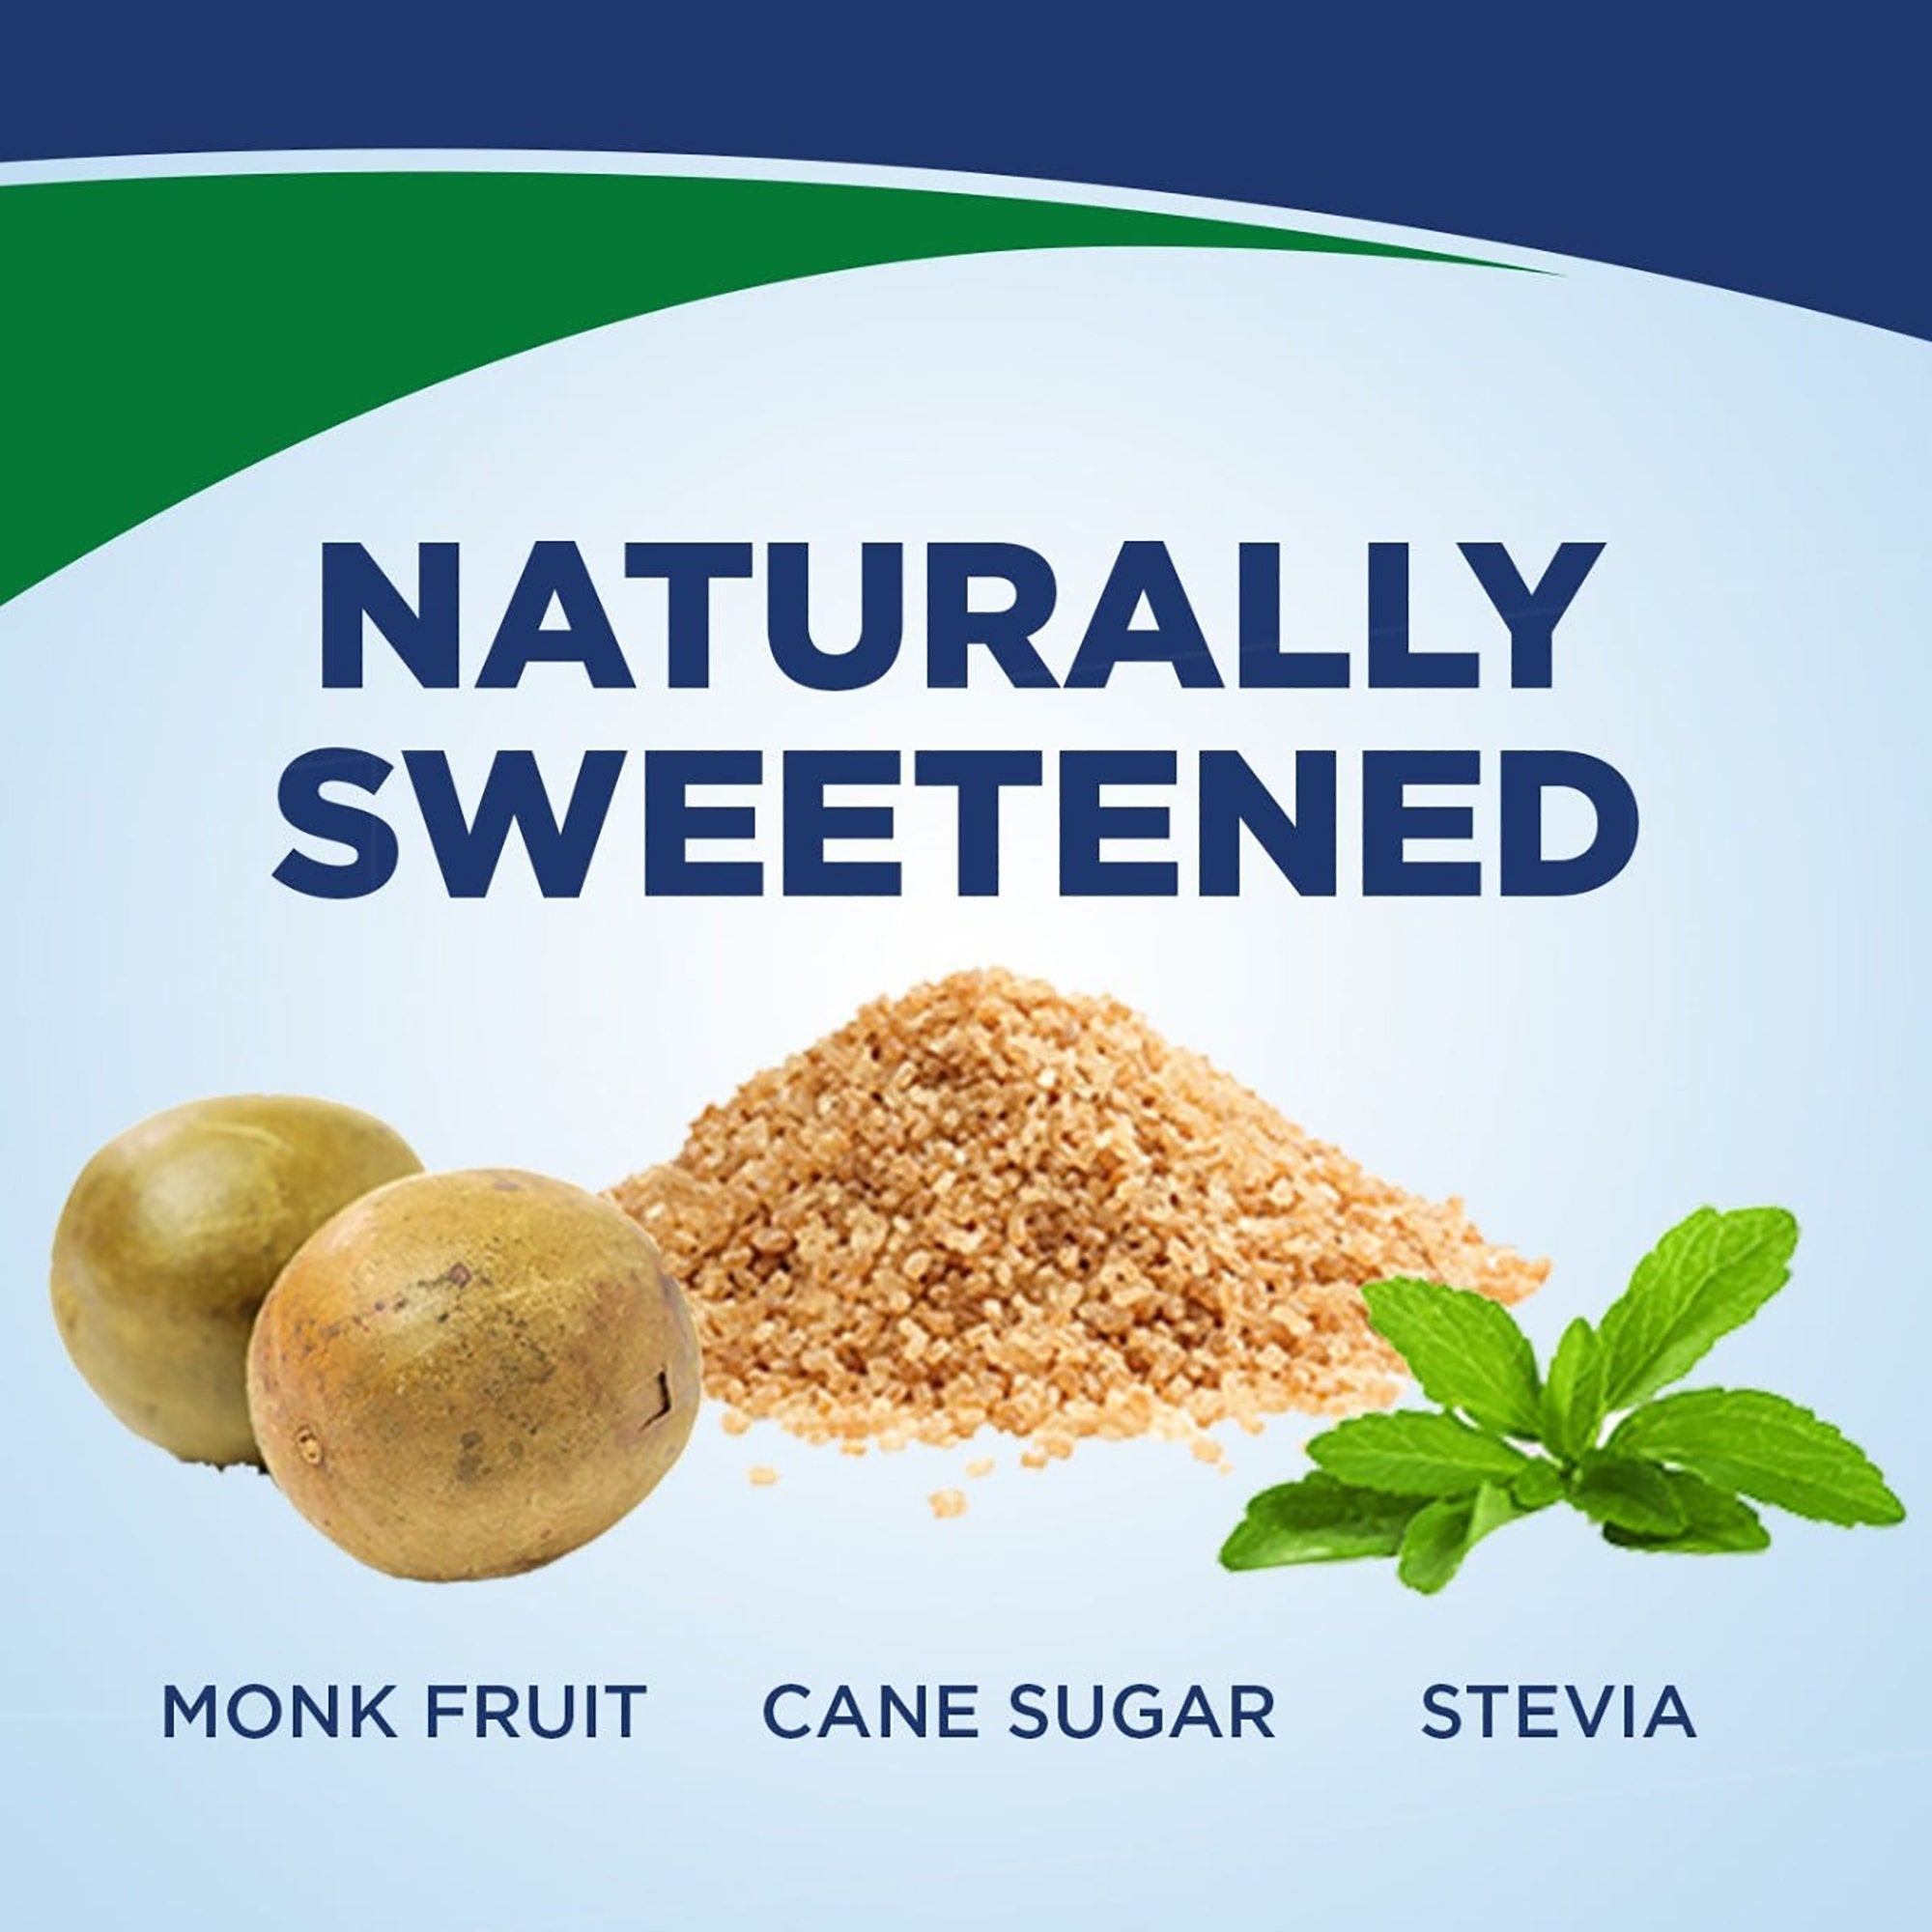 Oral Supplement Ensure Plant Based Protein Nutrition Shake Vanilla Flavor Liquid 11 oz. Carton